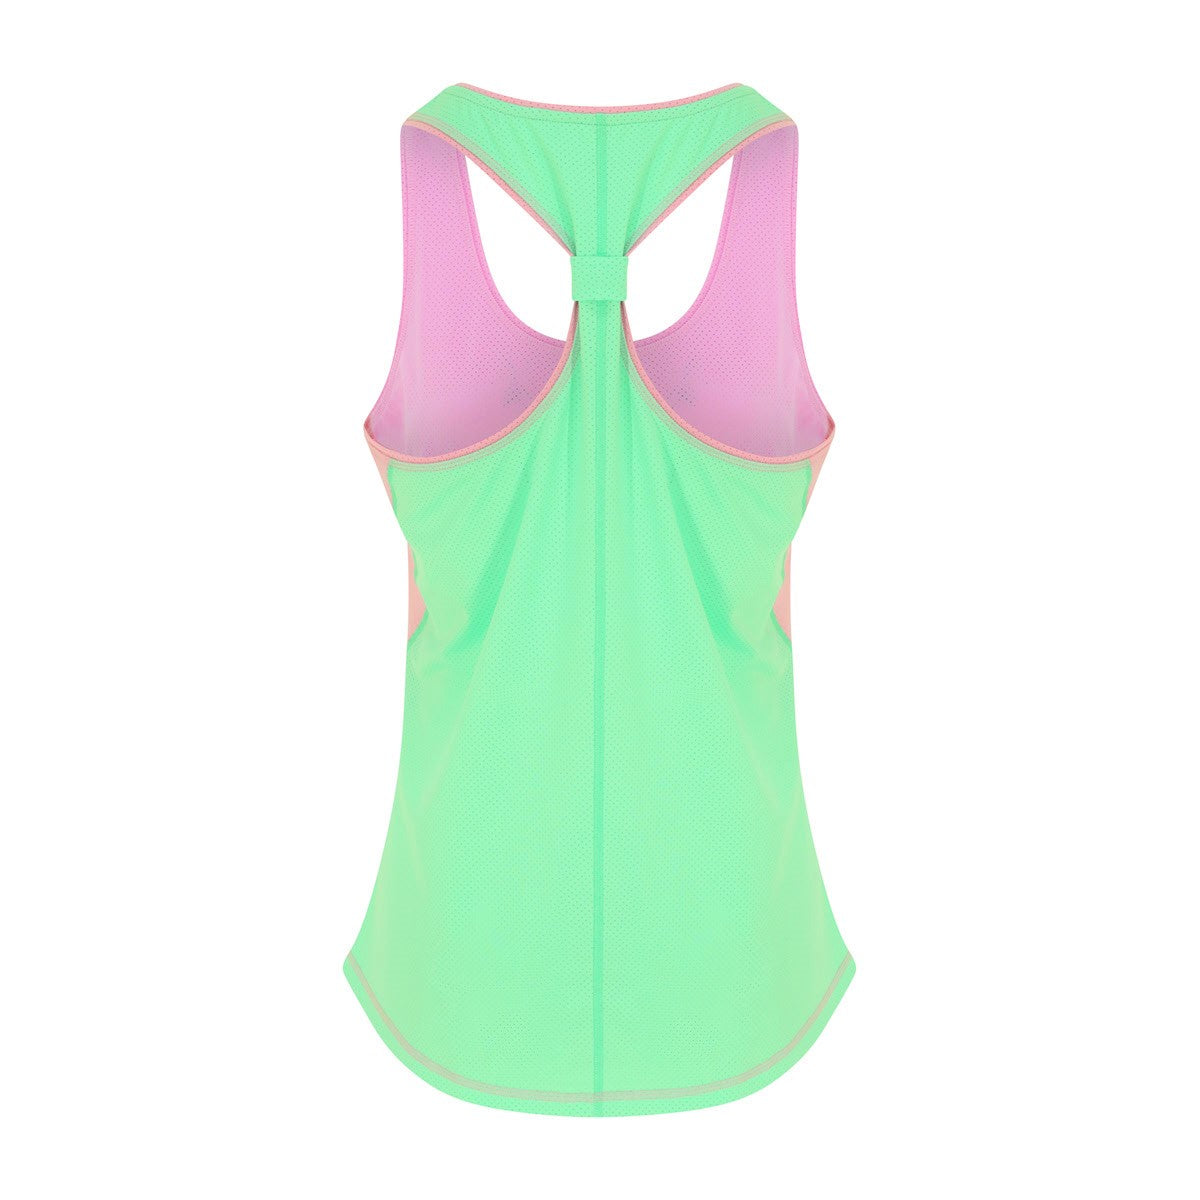 Pastel Pink Womens Gym Vest Top (Mint Green back)